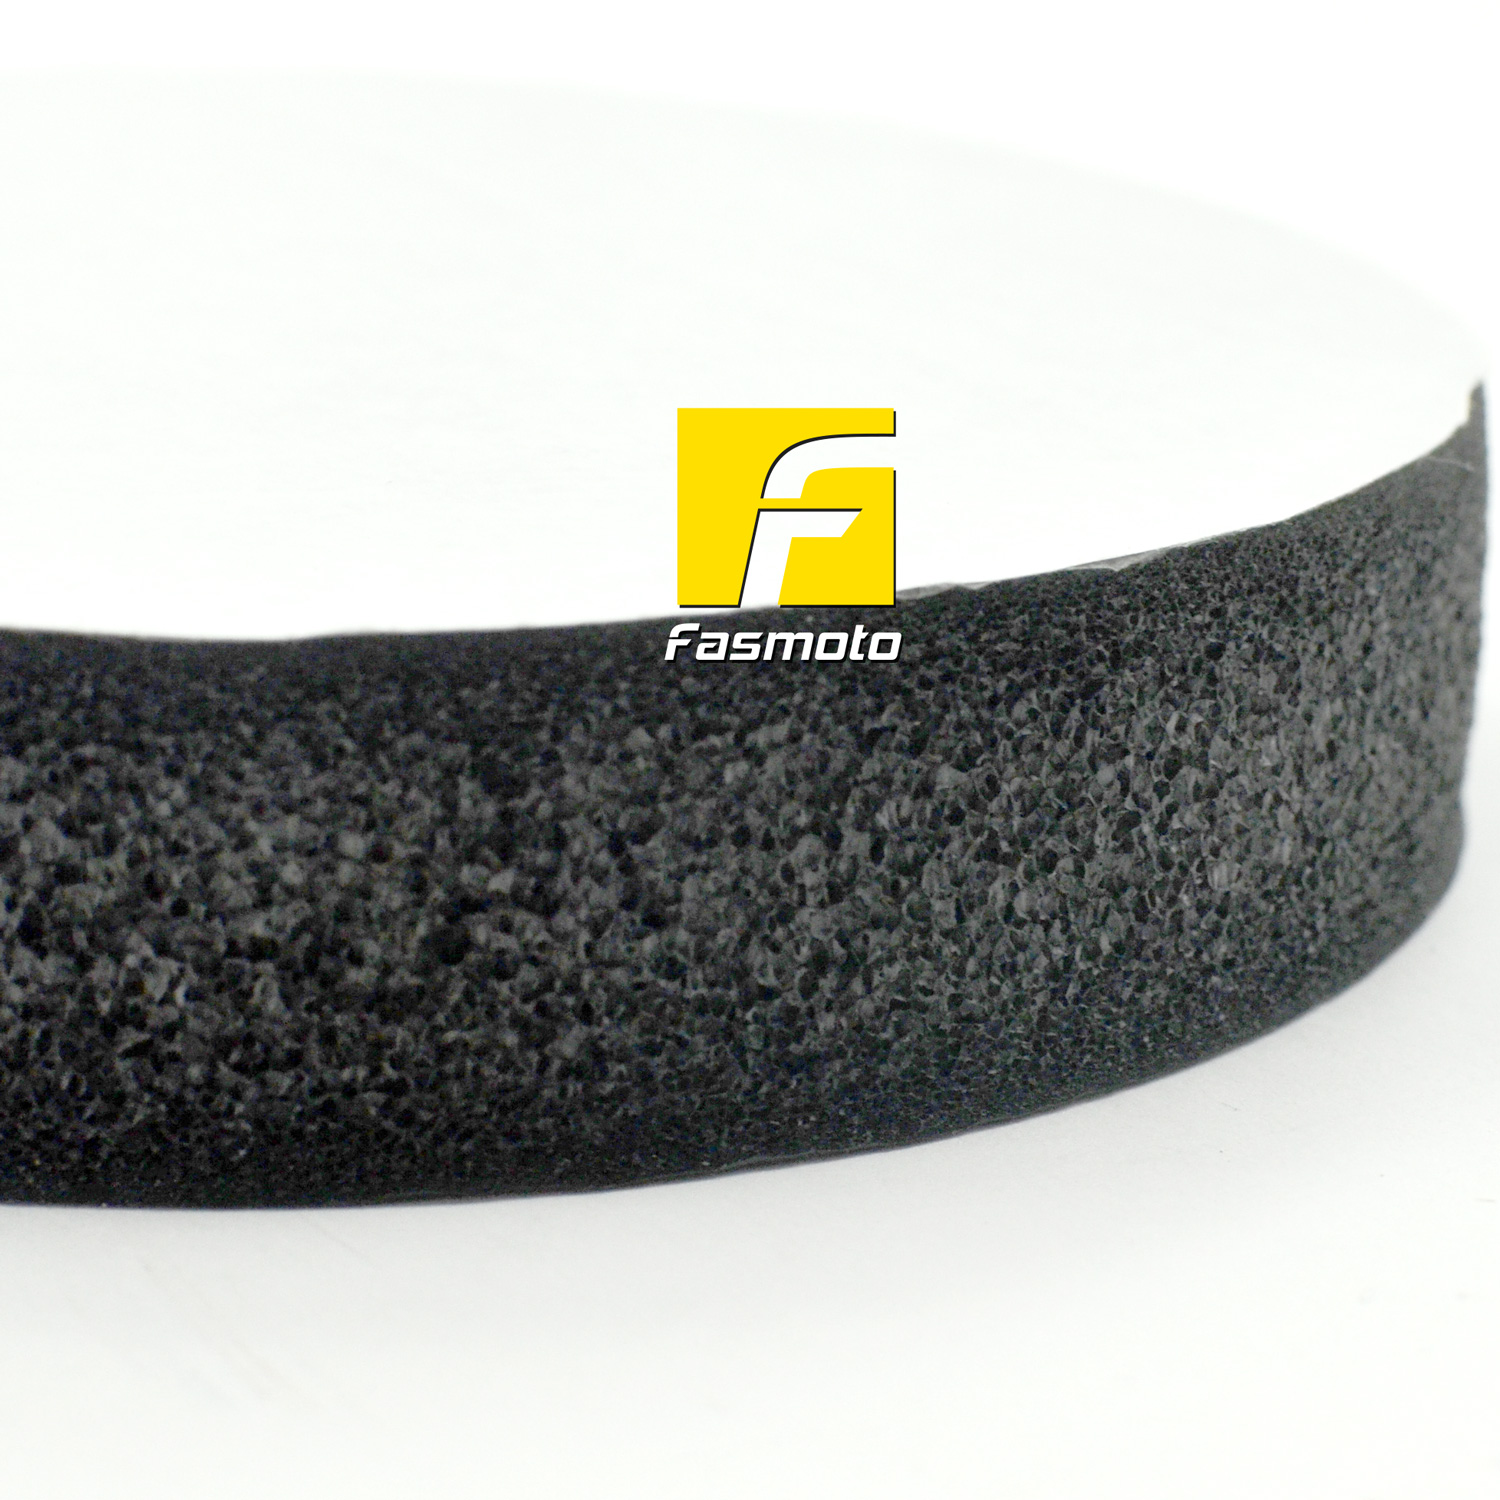 6.5 inch NBR Speaker Sound Proofing Foam Ring